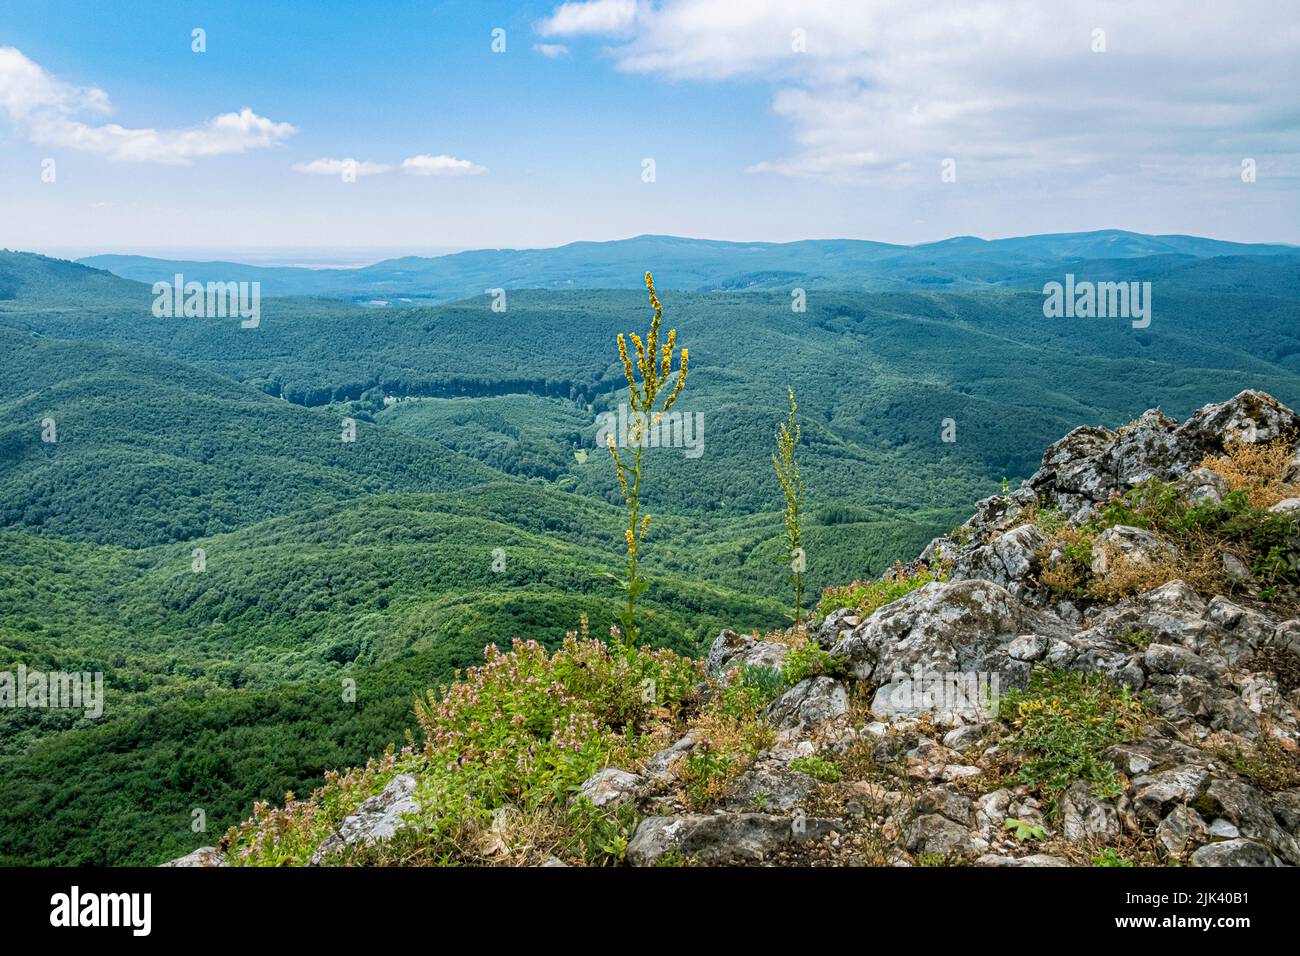 View from Vapenna - Rostun hill, Little Carpathians, Slovak republic. Seasonal natural scene. Stock Photo